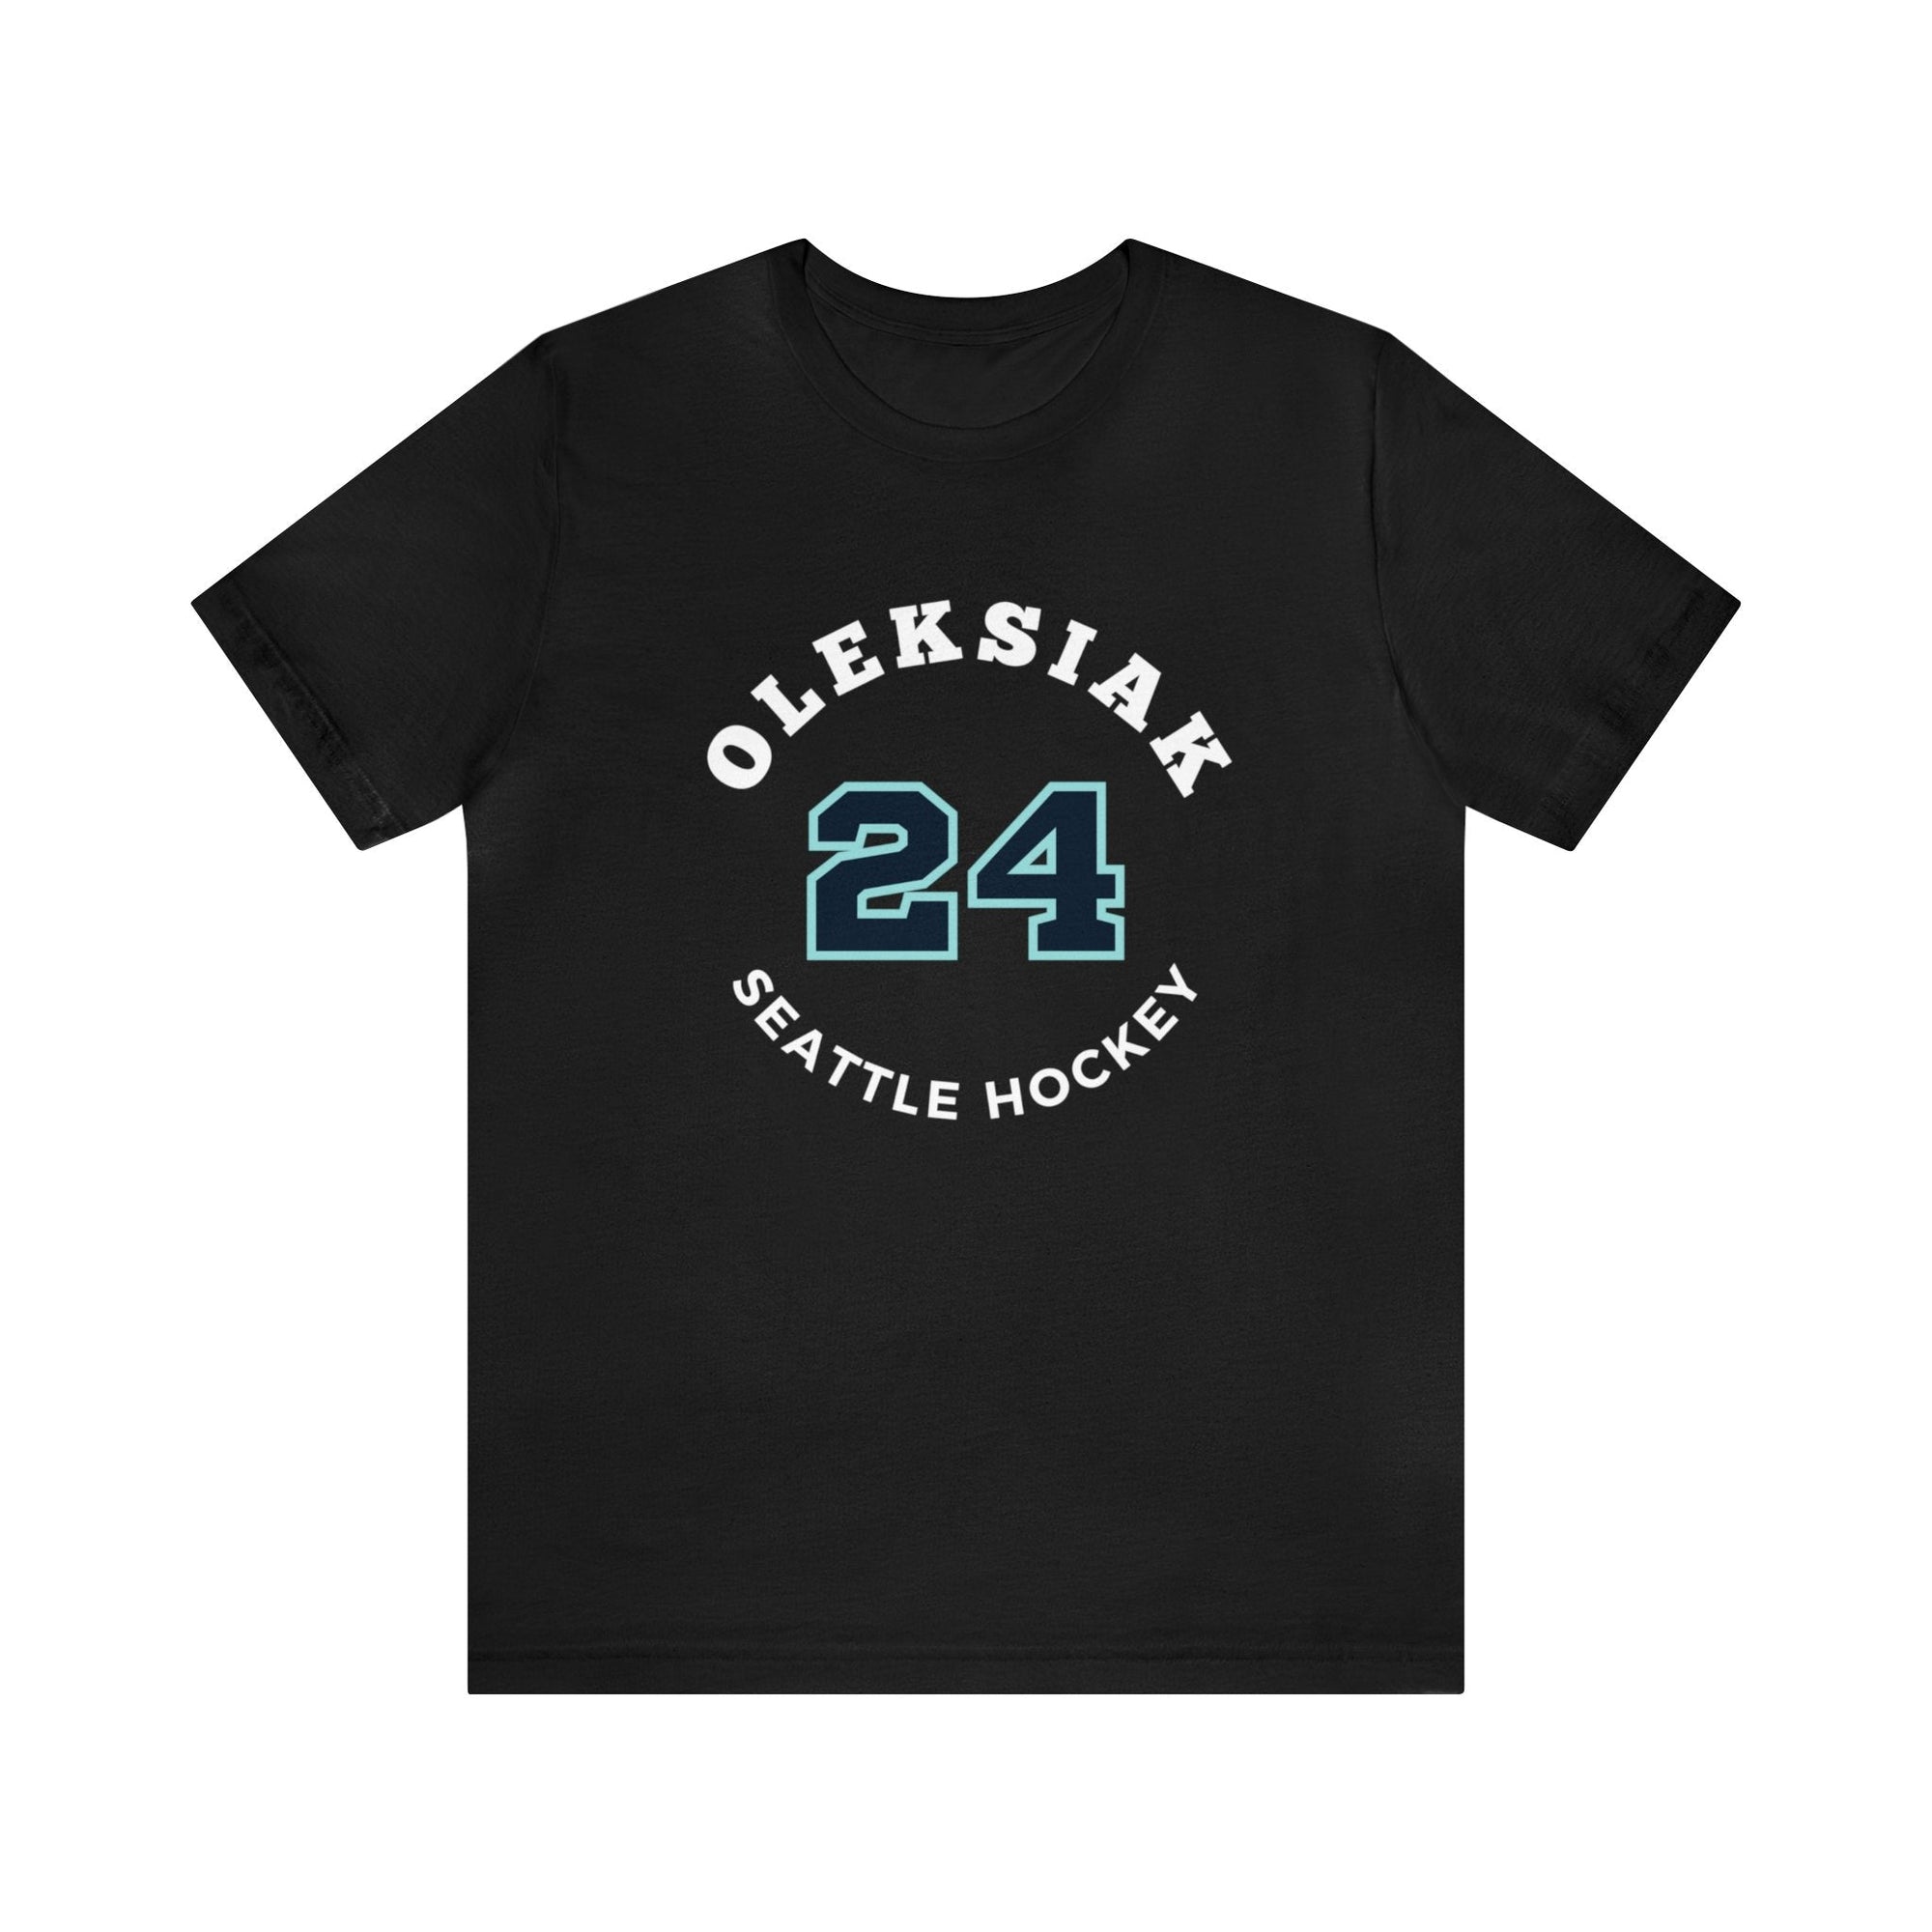 T-Shirt Oleksiak 24 Seattle Hockey Number Arch Design Unisex T-Shirt